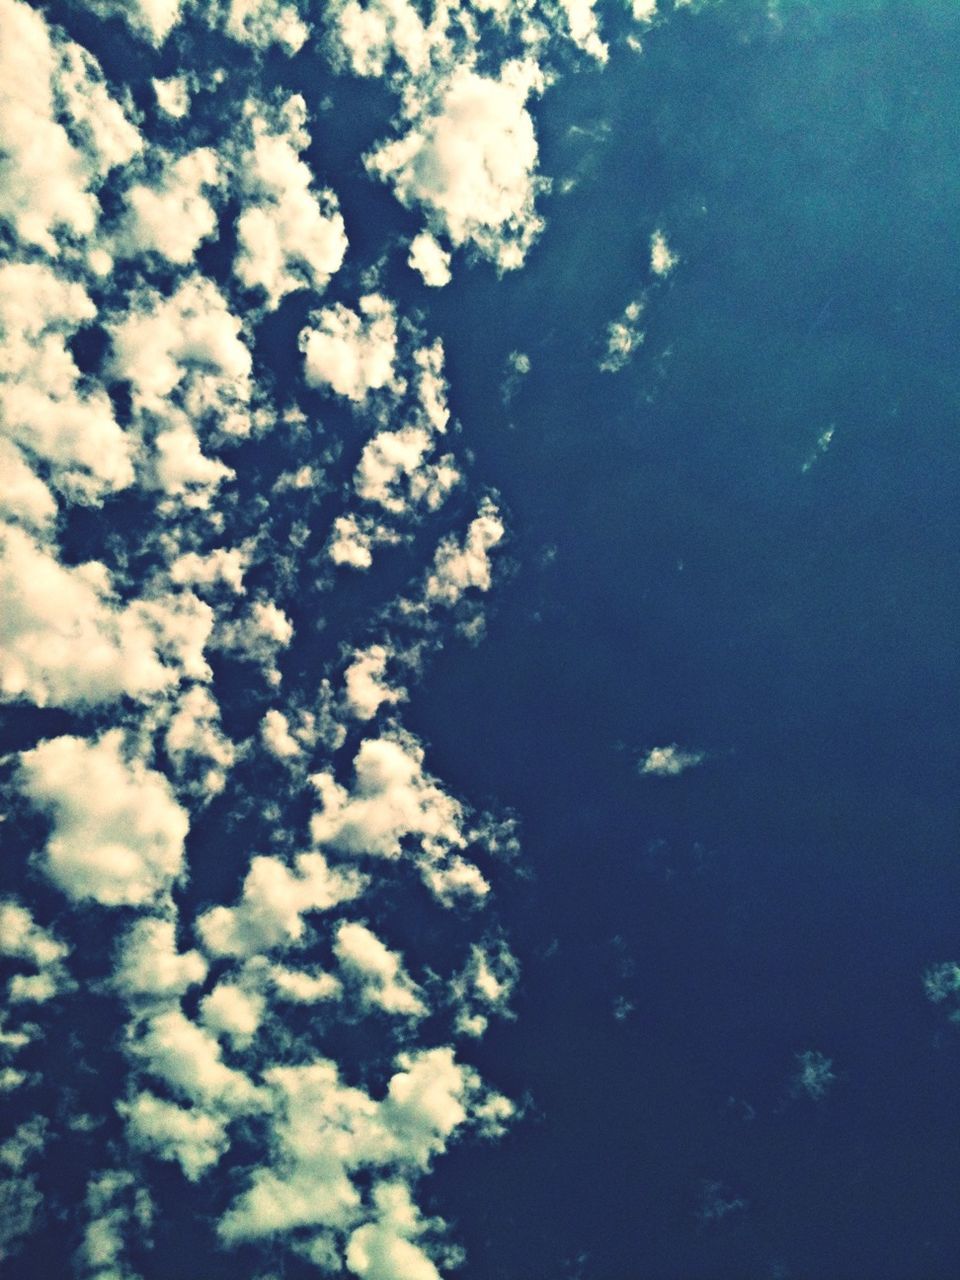 SCENIC VIEW OF SKY